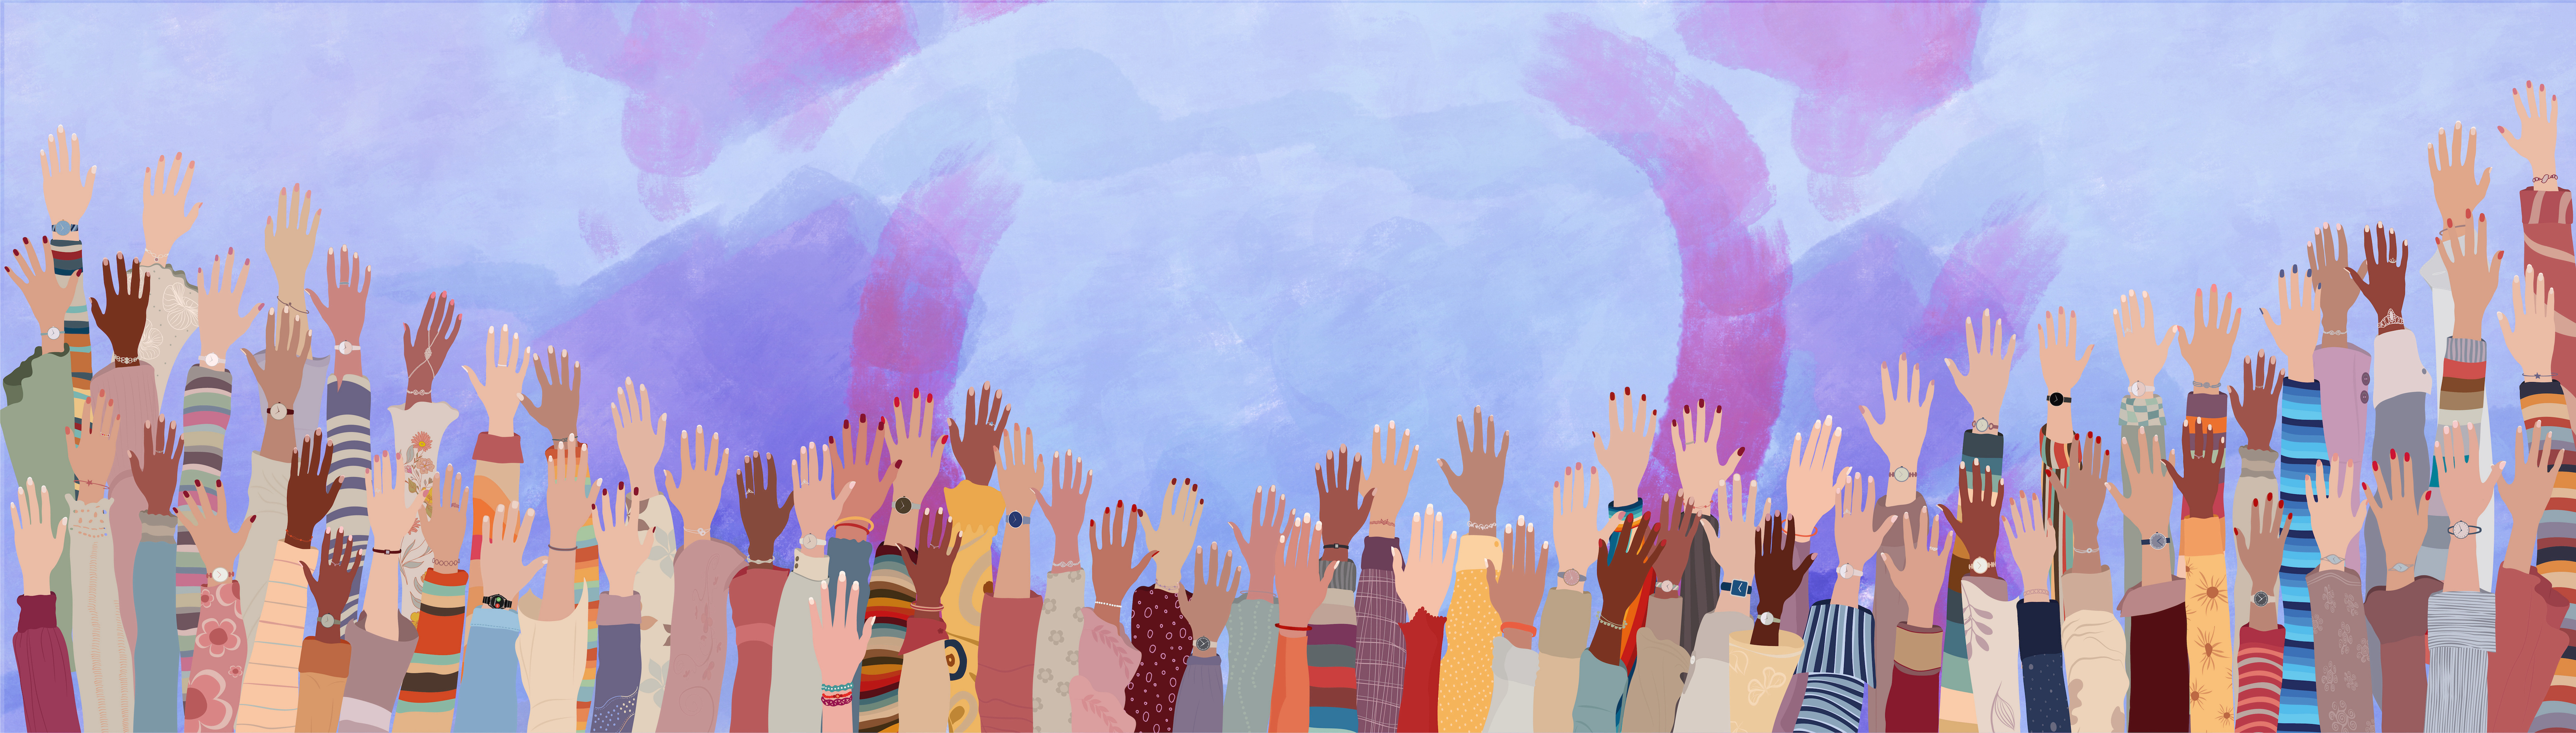 Diverse hands raised, illustration